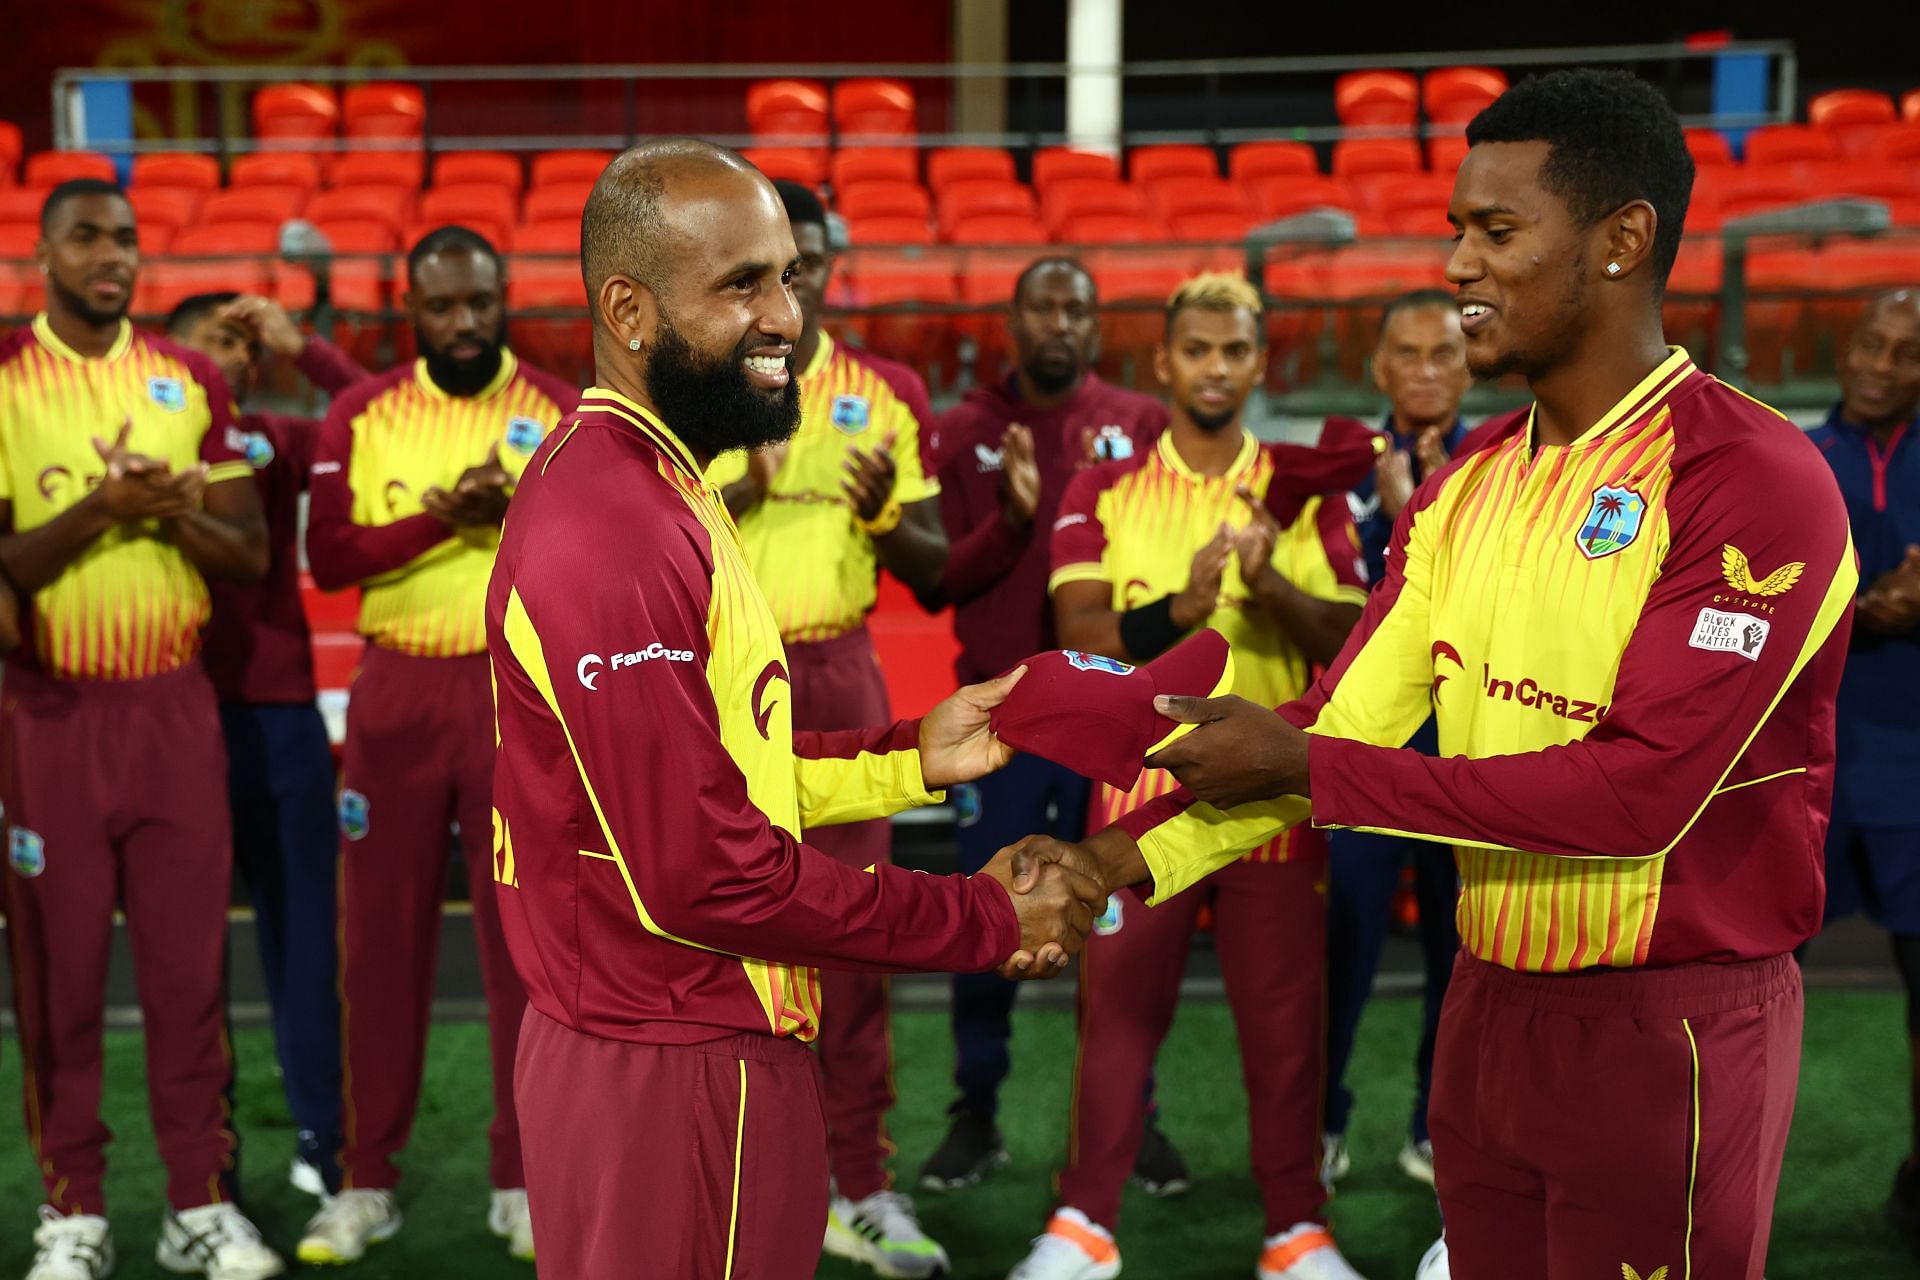 Cariah (L) receiving West Indies cap from Akeal Hosein